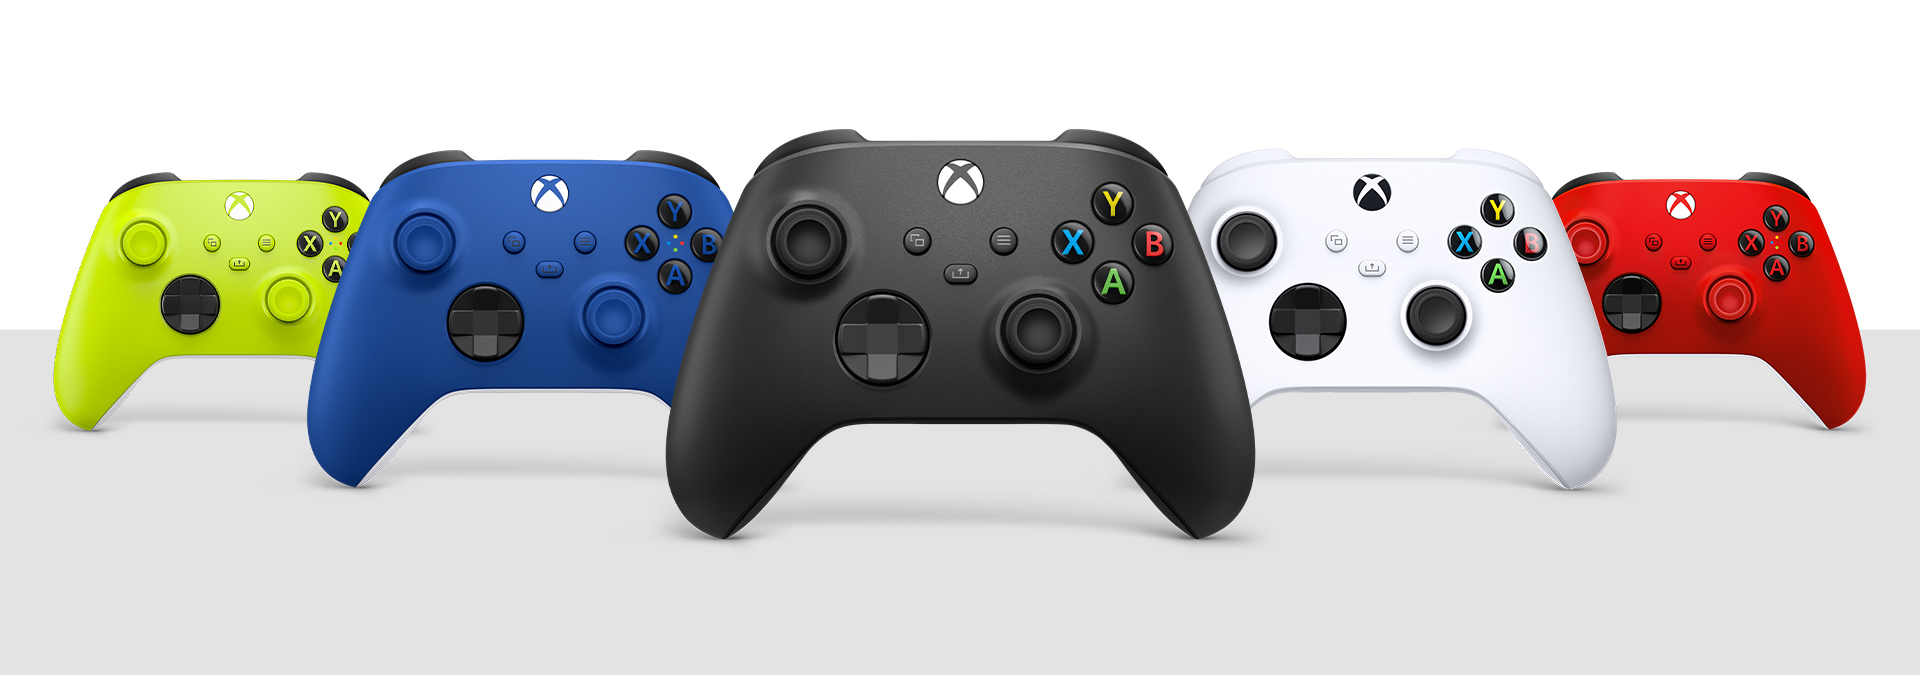 Беспроводной геймпад Xbox в цвете Carbon Black, Robot White, Shock Blue, Pulse Red и Electric Volt